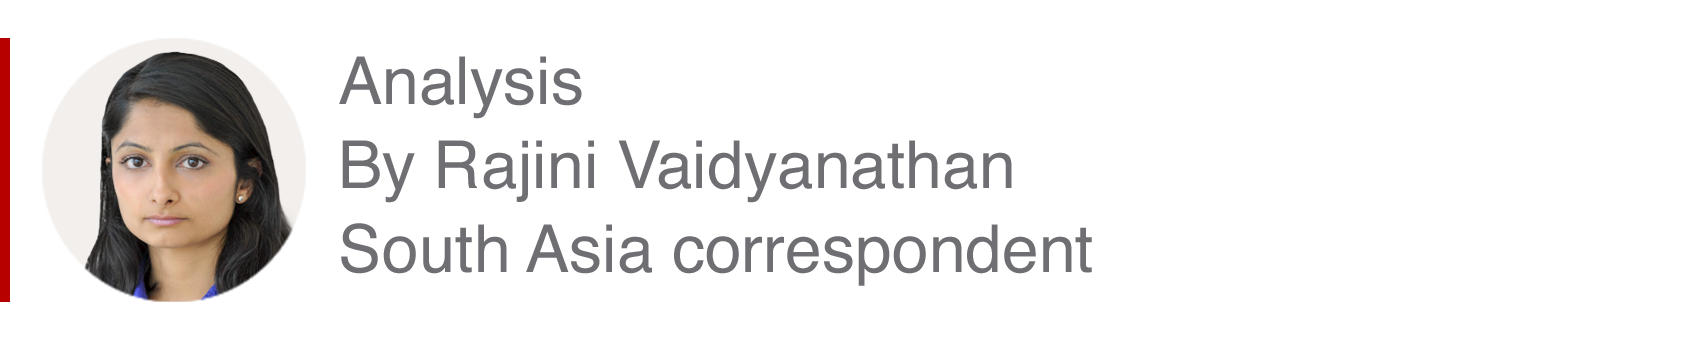 Analysis box by Rajini Vaidyanathan, South Asia correspondent